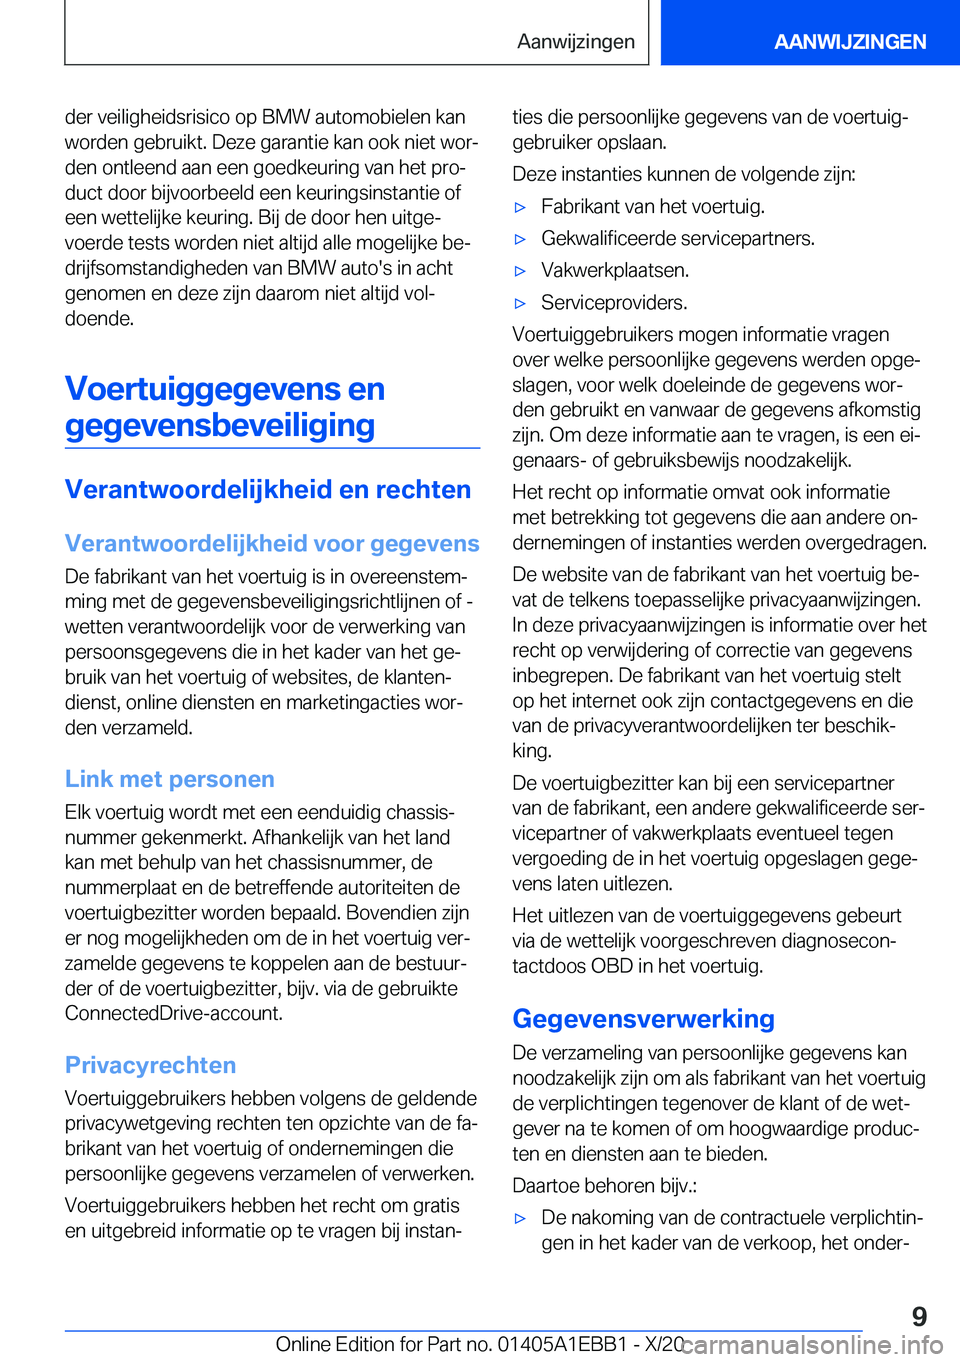 BMW 3 SERIES 2021  Instructieboekjes (in Dutch) �d�e�r��v�e�i�l�i�g�h�e�i�d�s�r�i�s�i�c�o��o�p��B�M�W��a�u�t�o�m�o�b�i�e�l�e�n��k�a�n
�w�o�r�d�e�n��g�e�b�r�u�i�k�t�.��D�e�z�e��g�a�r�a�n�t�i�e��k�a�n��o�o�k��n�i�e�t��w�o�rj
�d�e�n��o�n